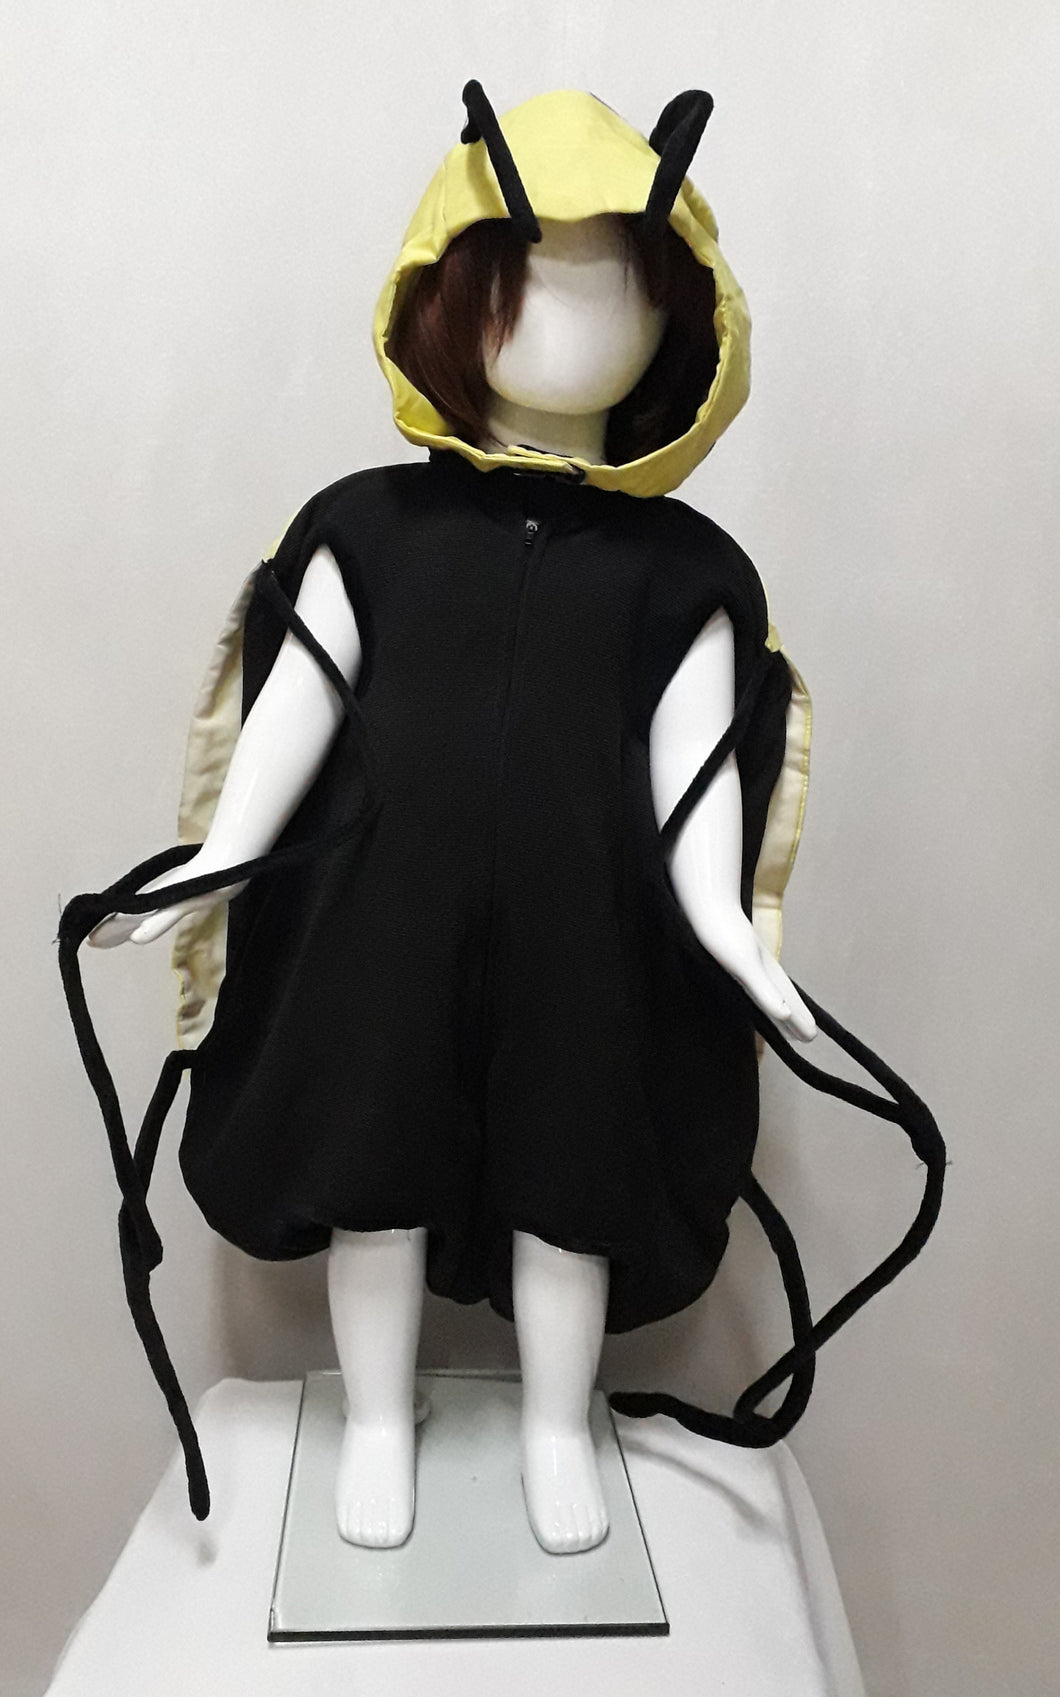 Bug Costume for kids 2-4yo / Insect / Beetle